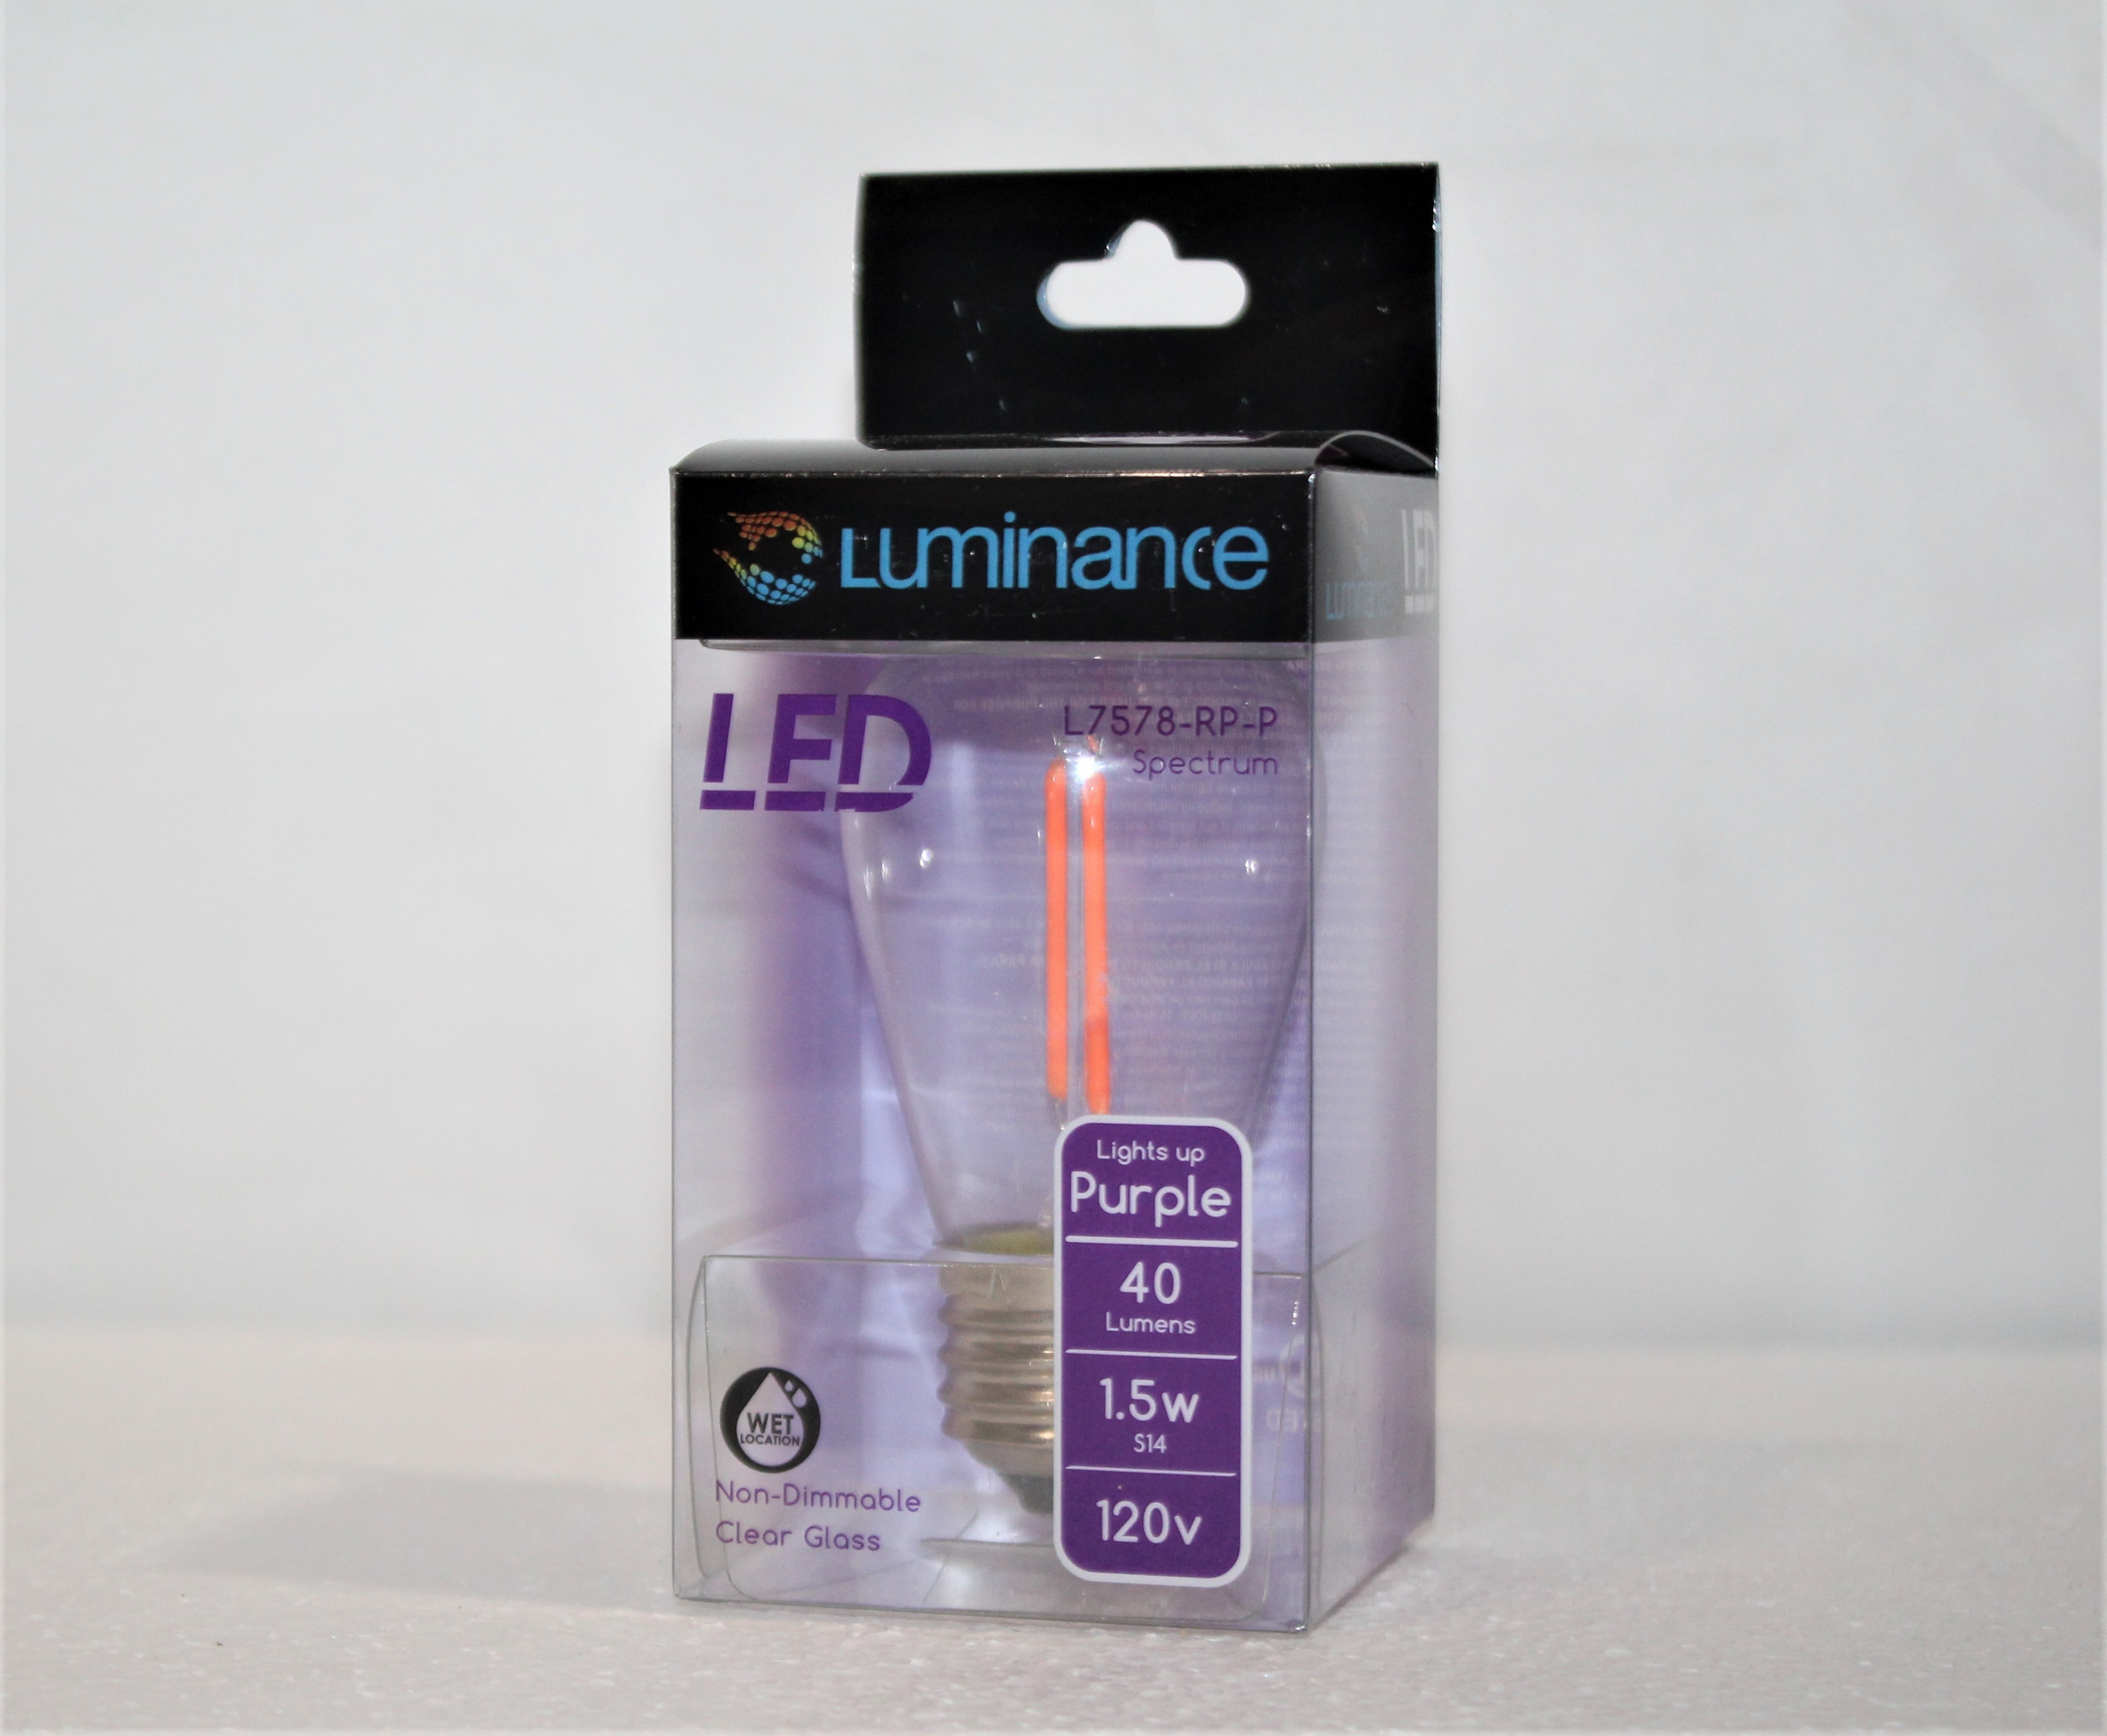 Luminance A19 Non-Dimmable E26 LED 1.5W Light S14 Bulb Purple L7578-RP-P